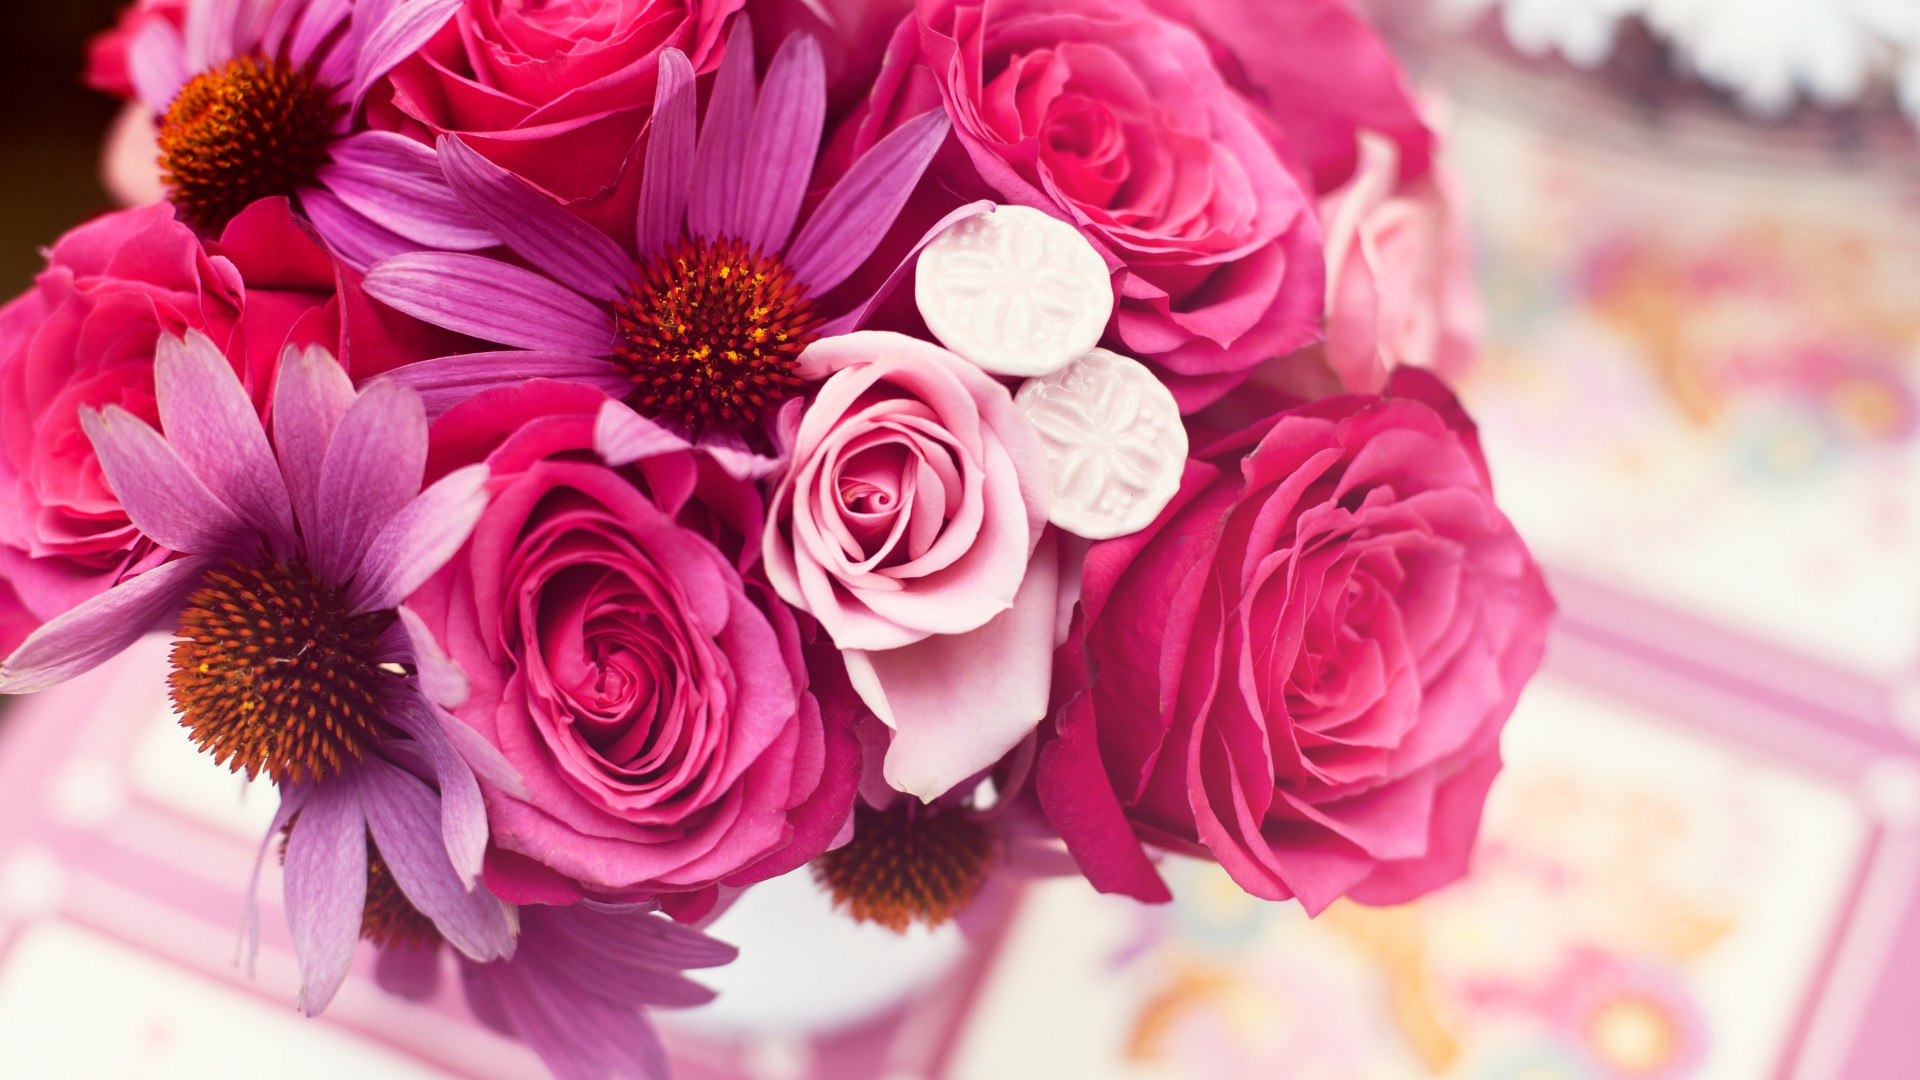 Розы, 4k, HD, Букет цветов, розовый, Garden roses, 4k, HD wallpaper, Flower bouquet, pink (horizontal)